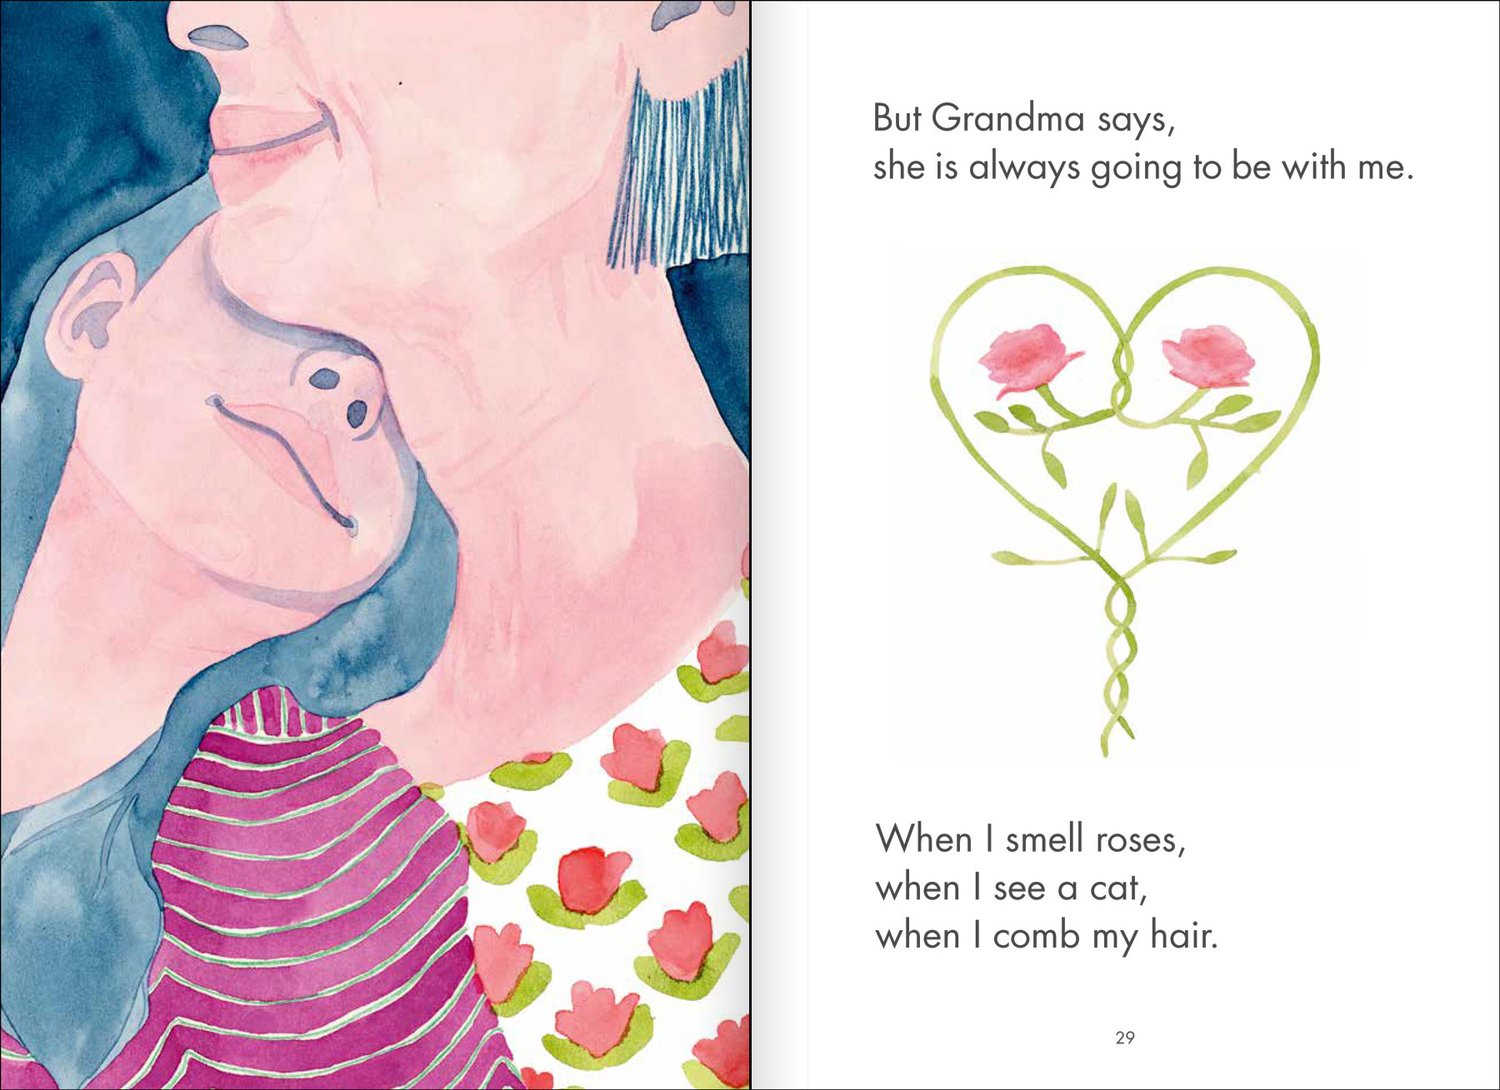 Image of Grandma's Hair Is Sick 📕 Children's book